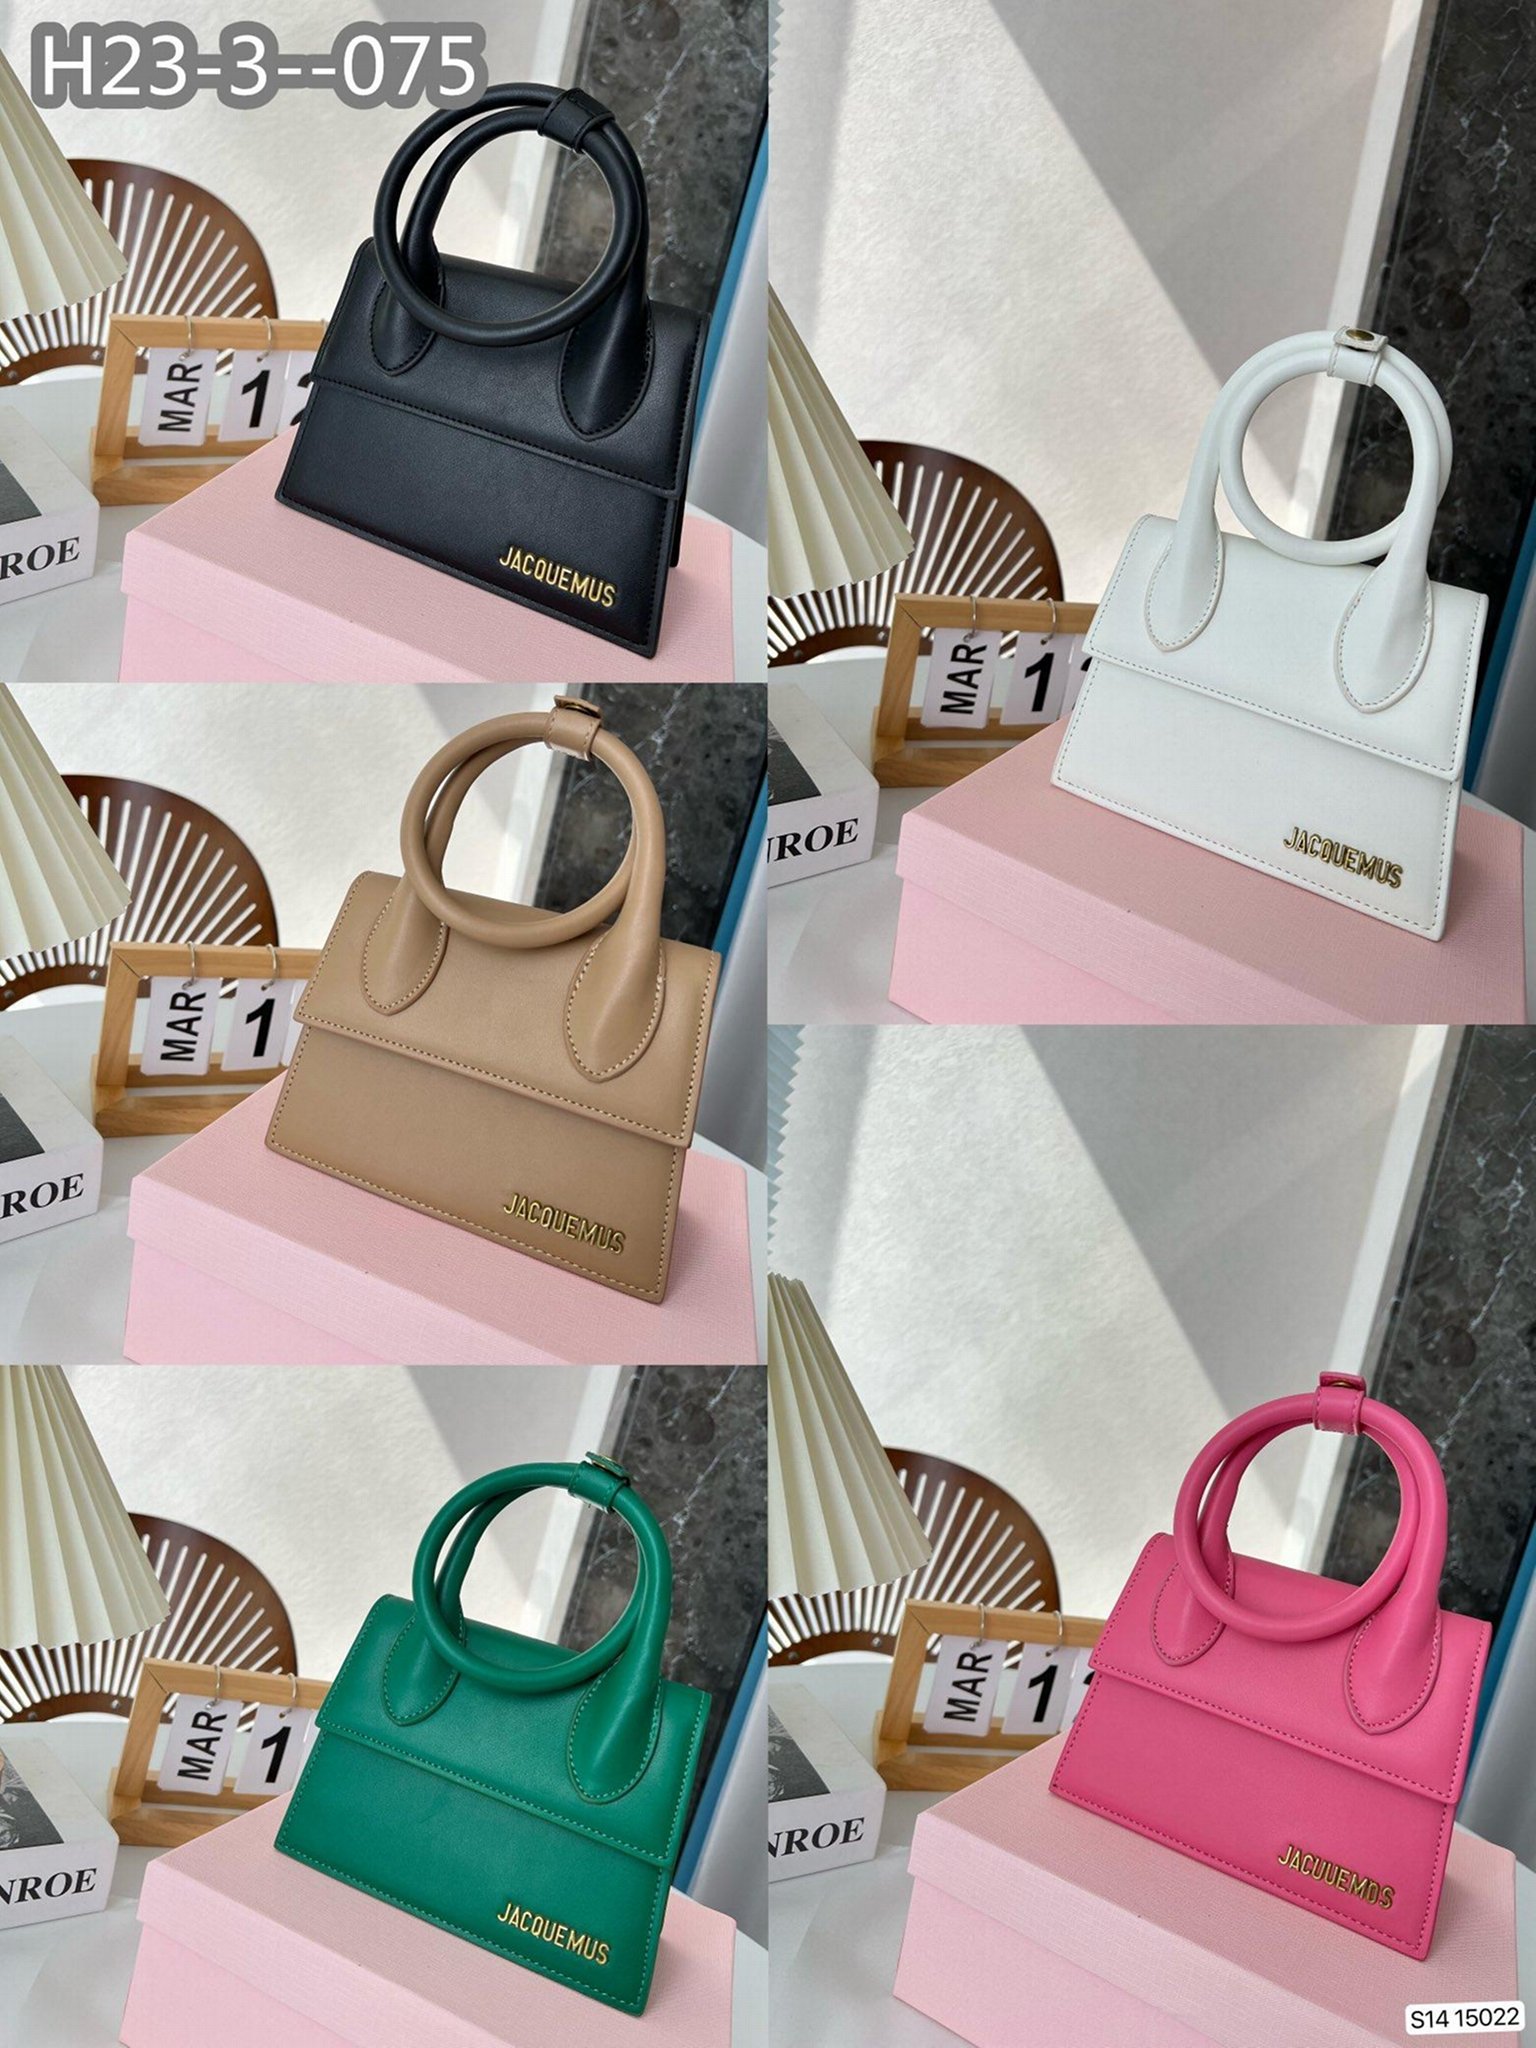 JACOUEMUS bag 7636135,5 colors, Loop Handle Pack, High quality